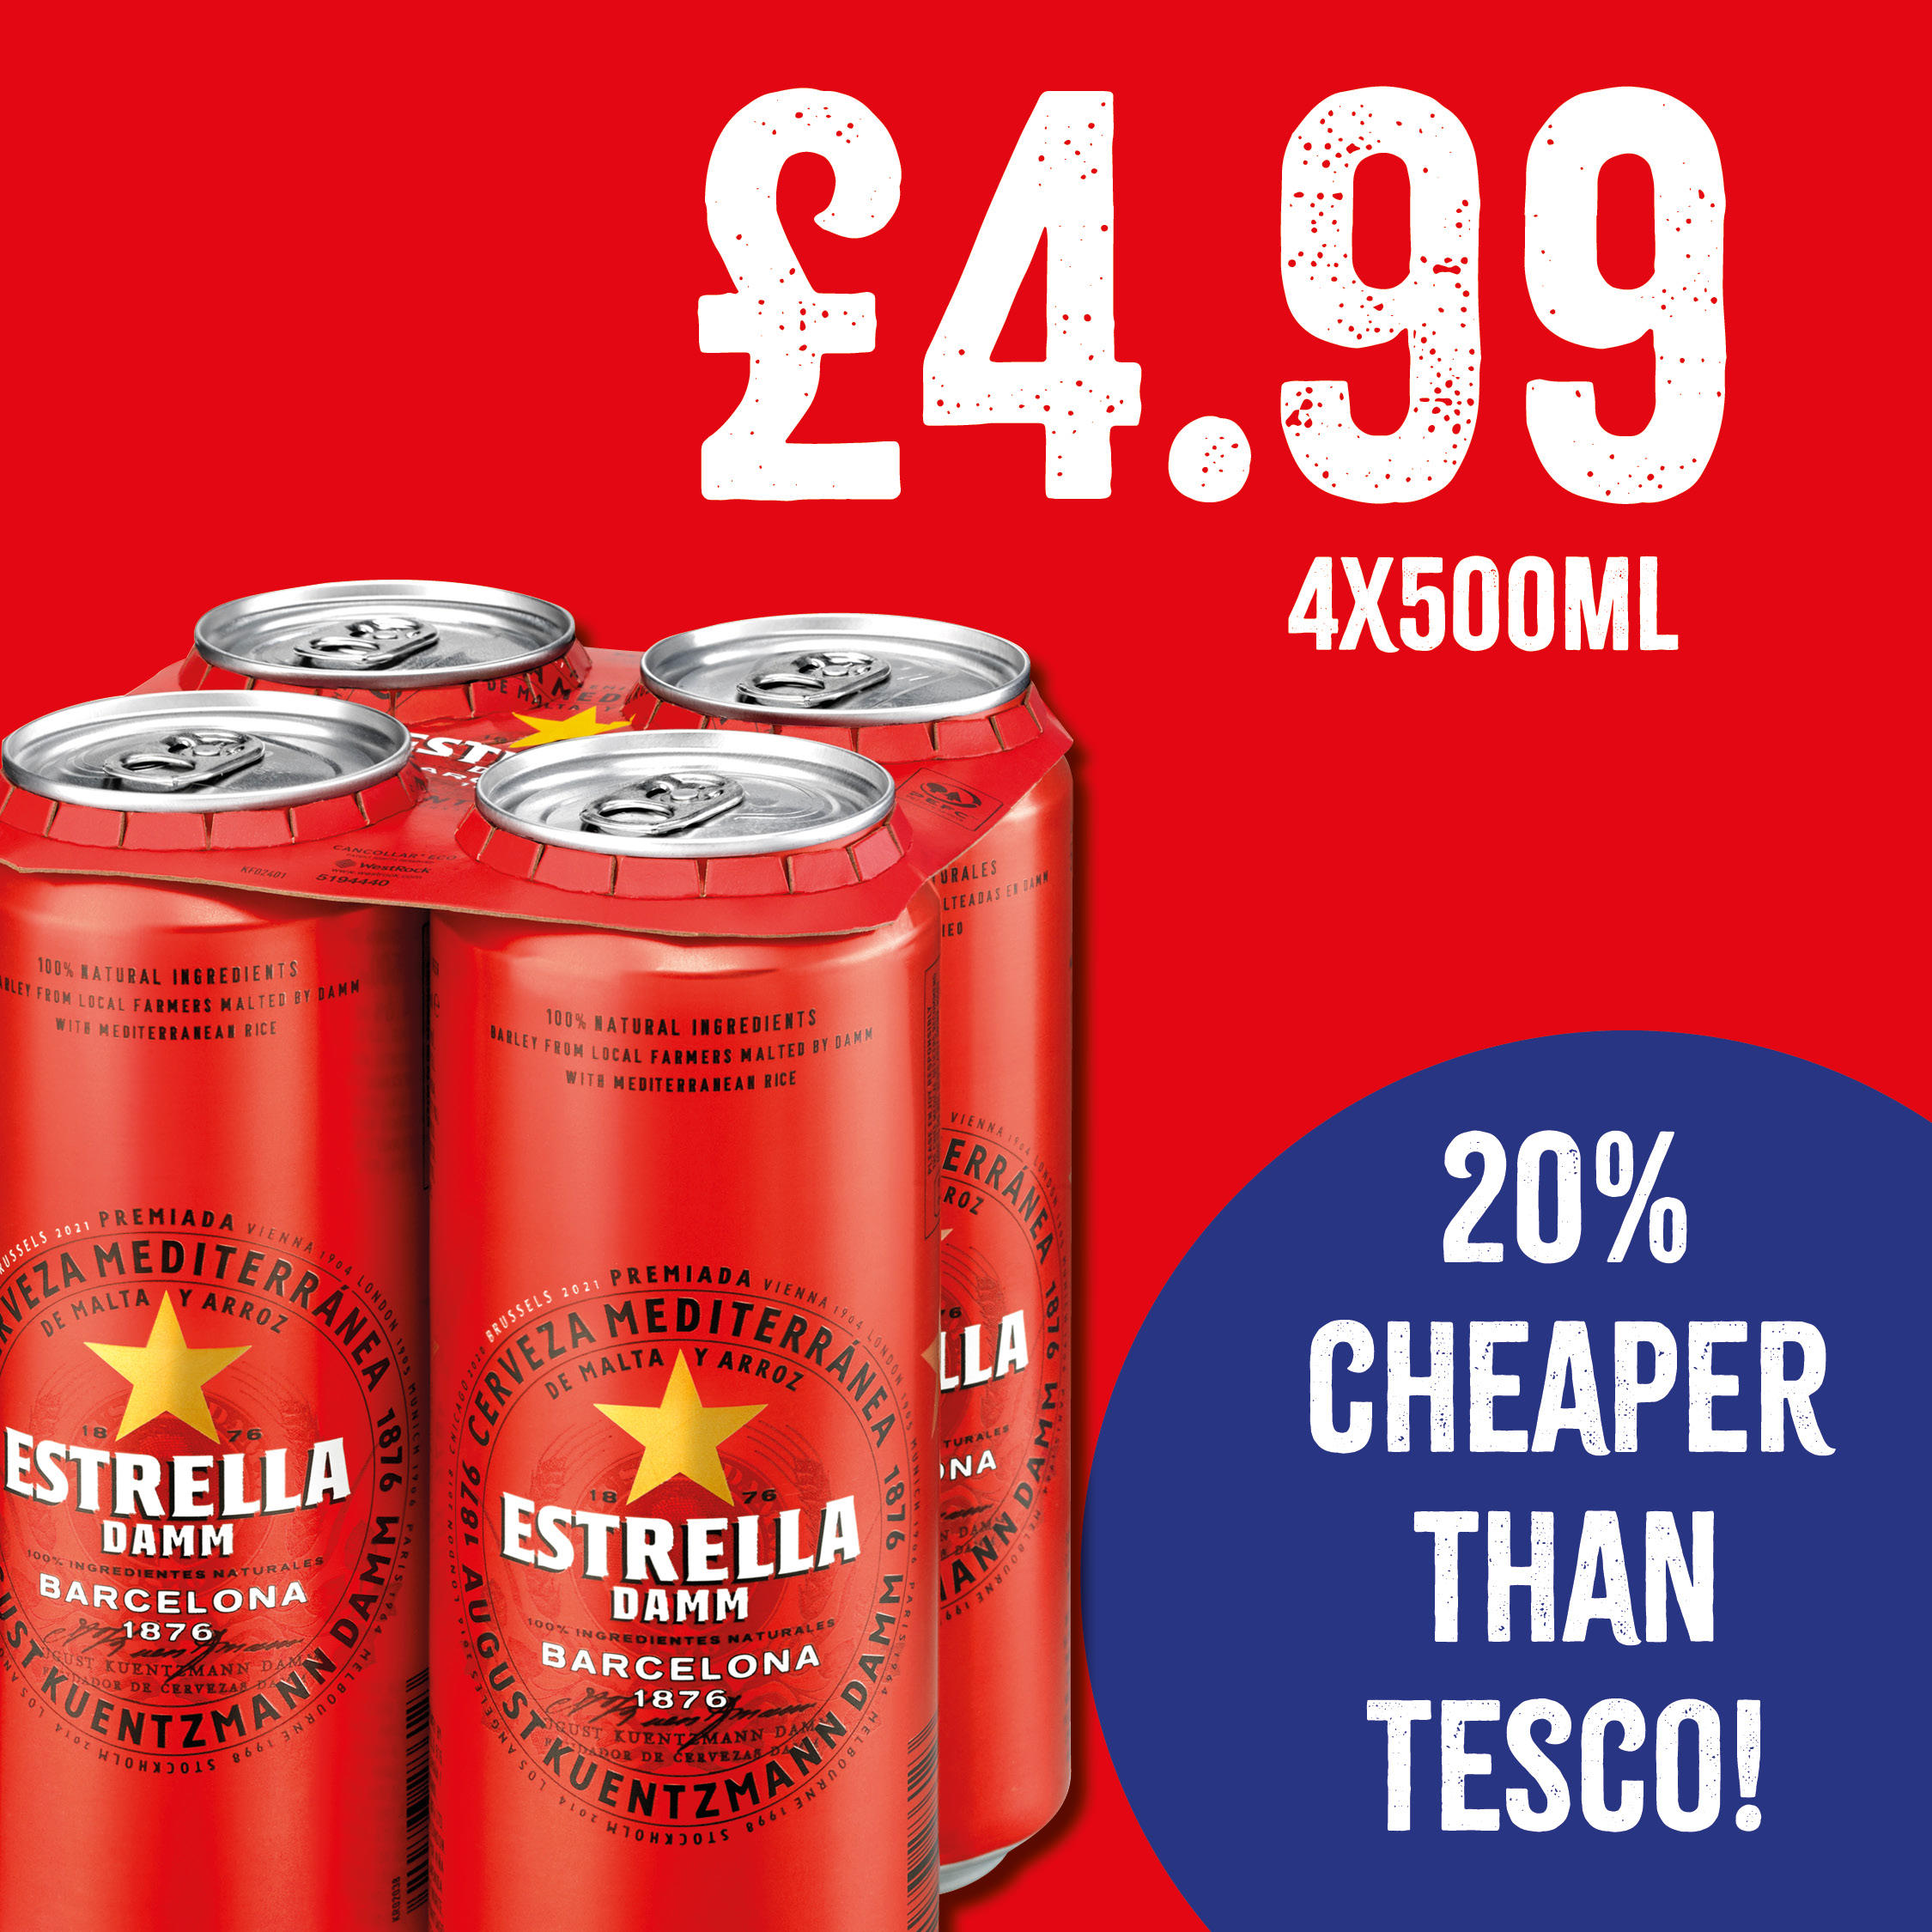 Estrella 4 x 500ml - Only £4.99 
20% Cheaper than Tesco Bargain Booze Liverpool 01515 317446